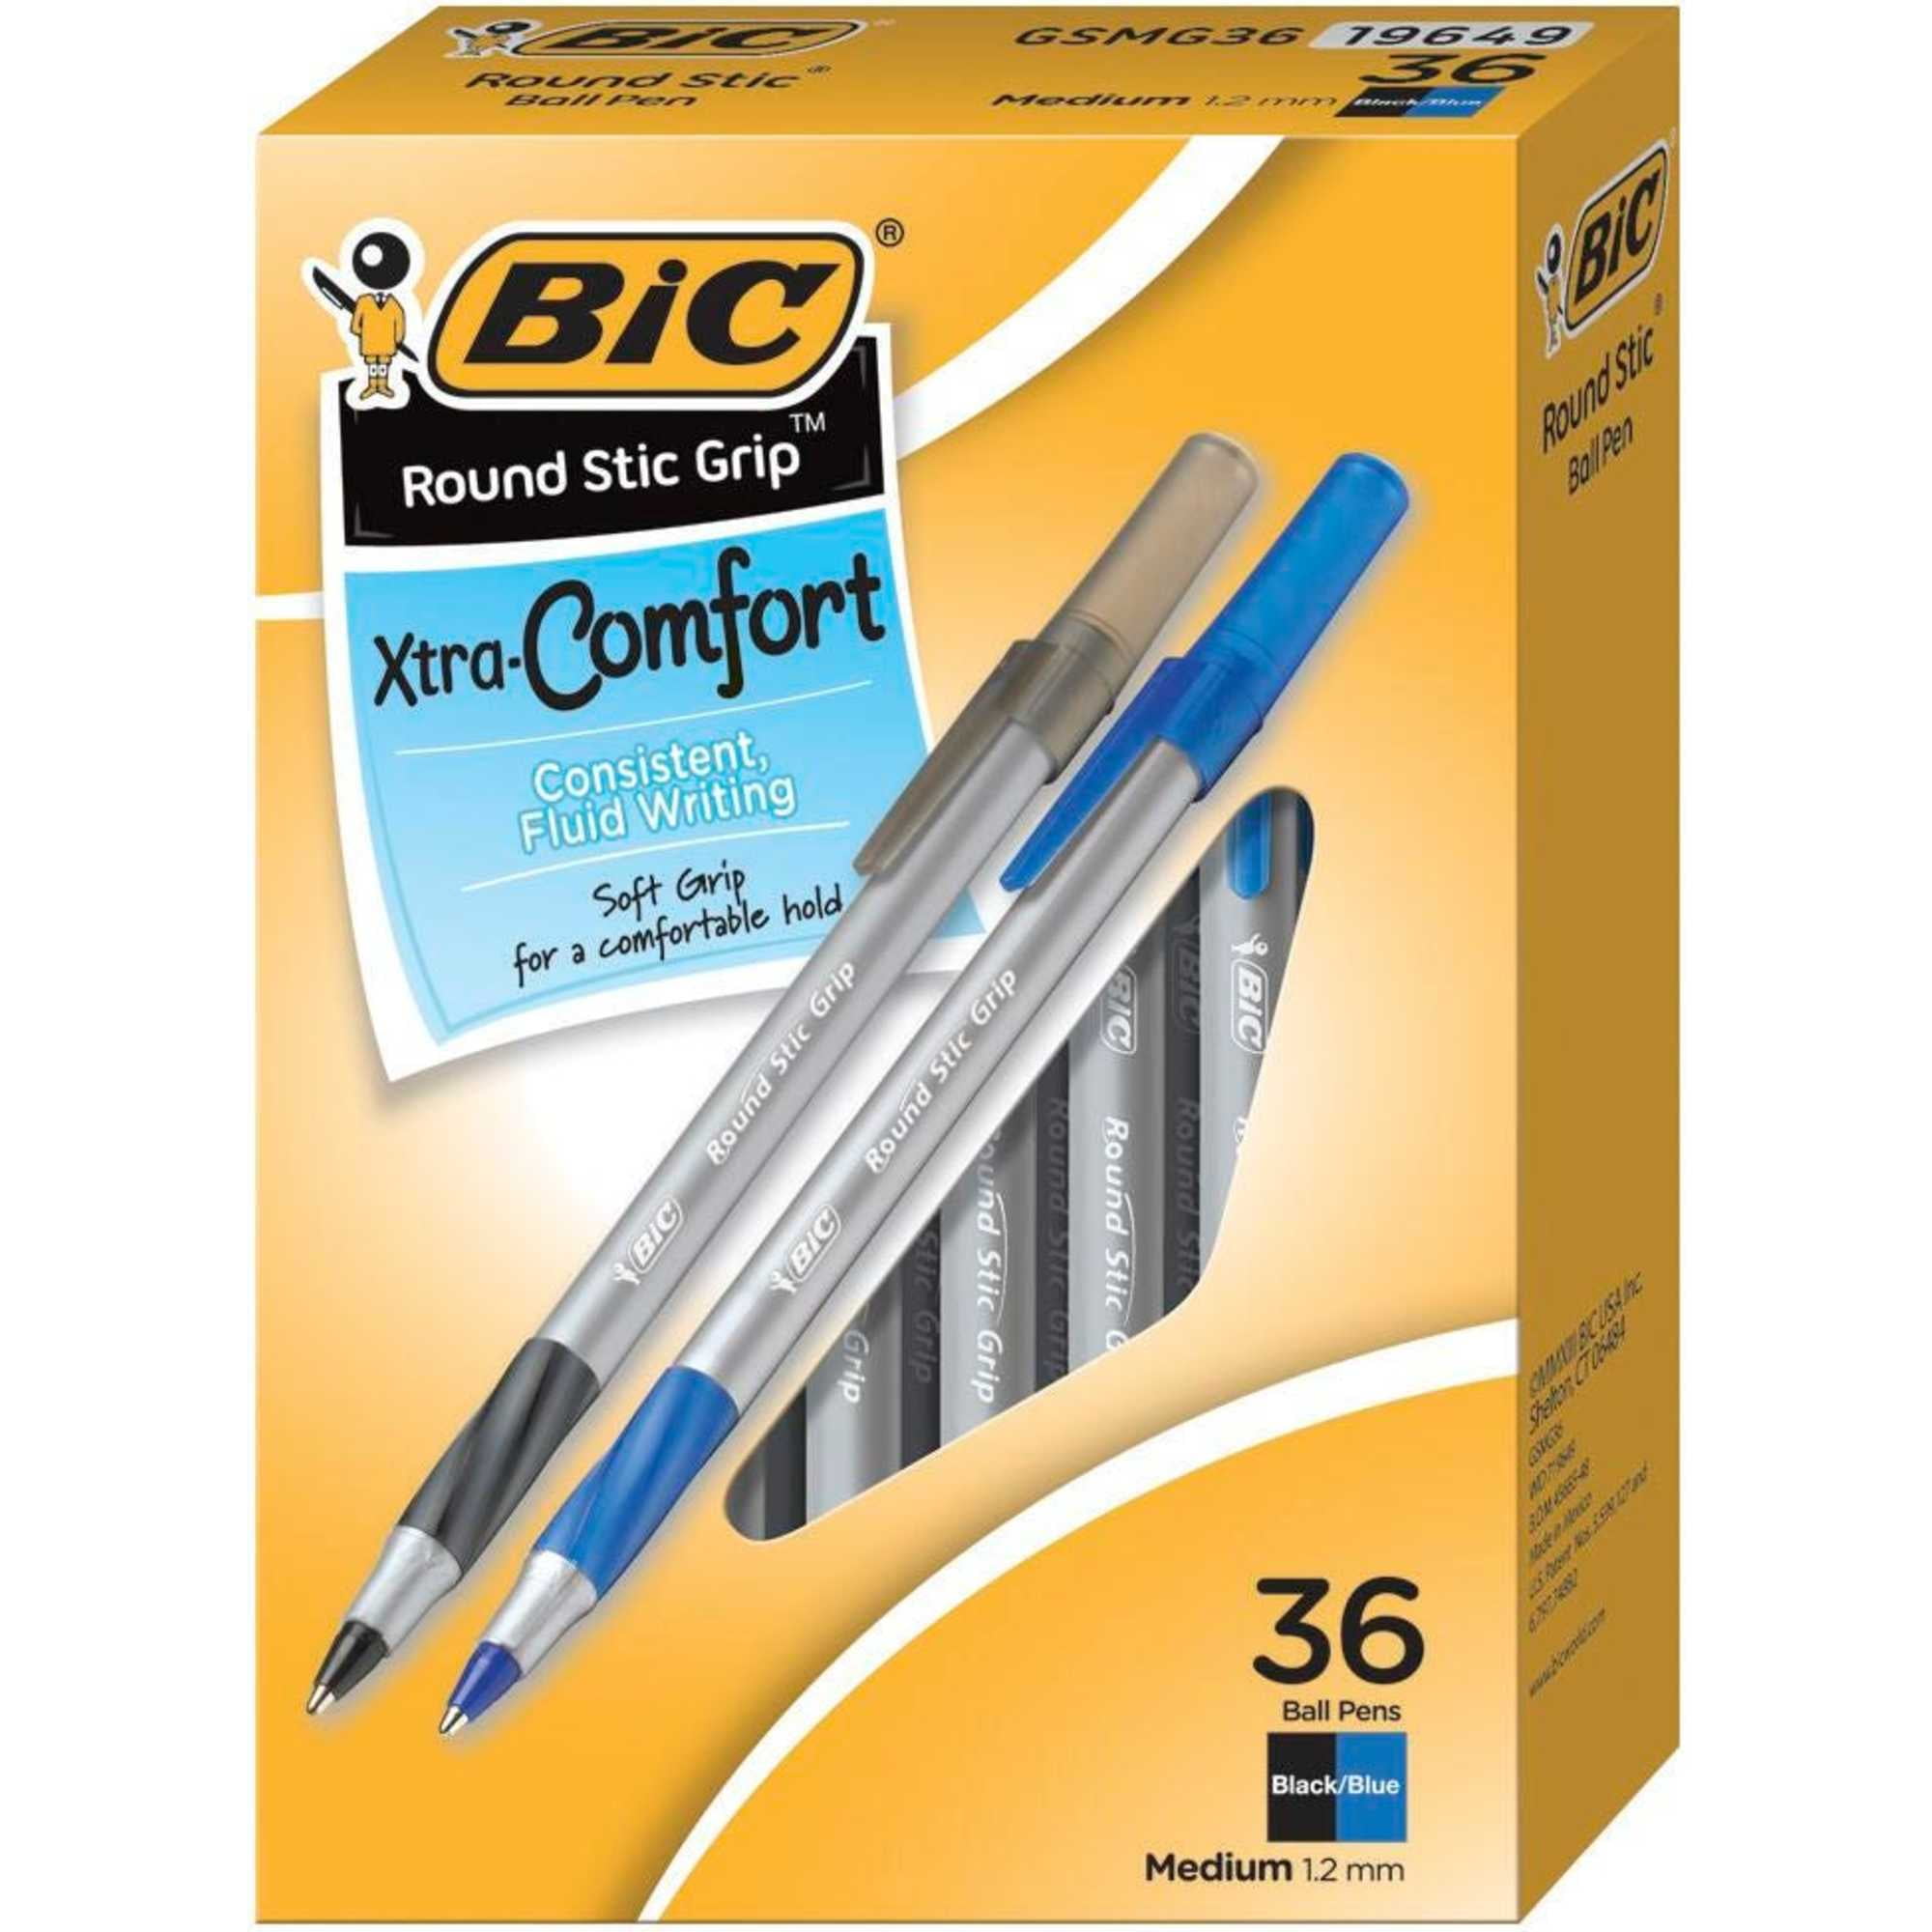 BIC® Cristal® Xtra Smooth Medium Ball Point Pens - Blue, 10 pk - Fred Meyer